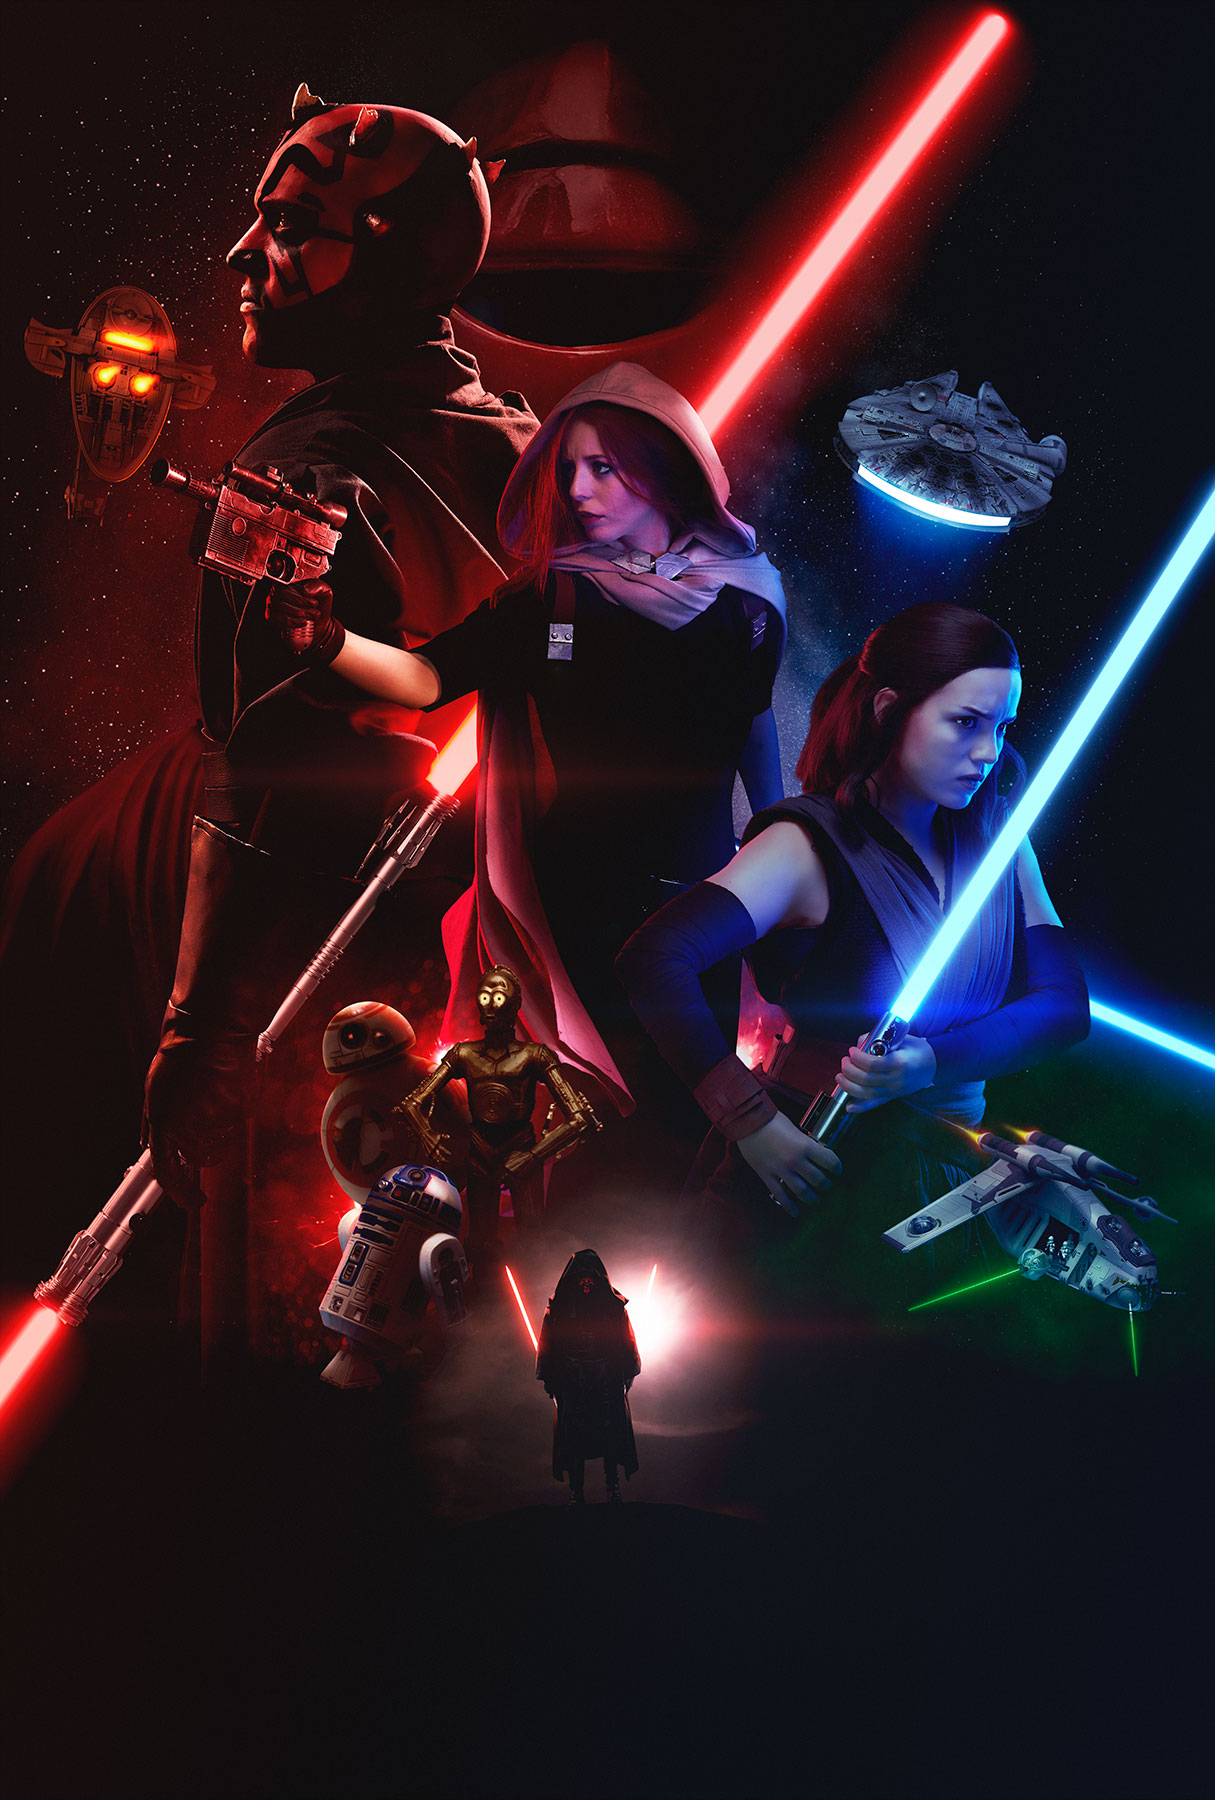 Sayanoff Arthur Star Wars Poster 02 15